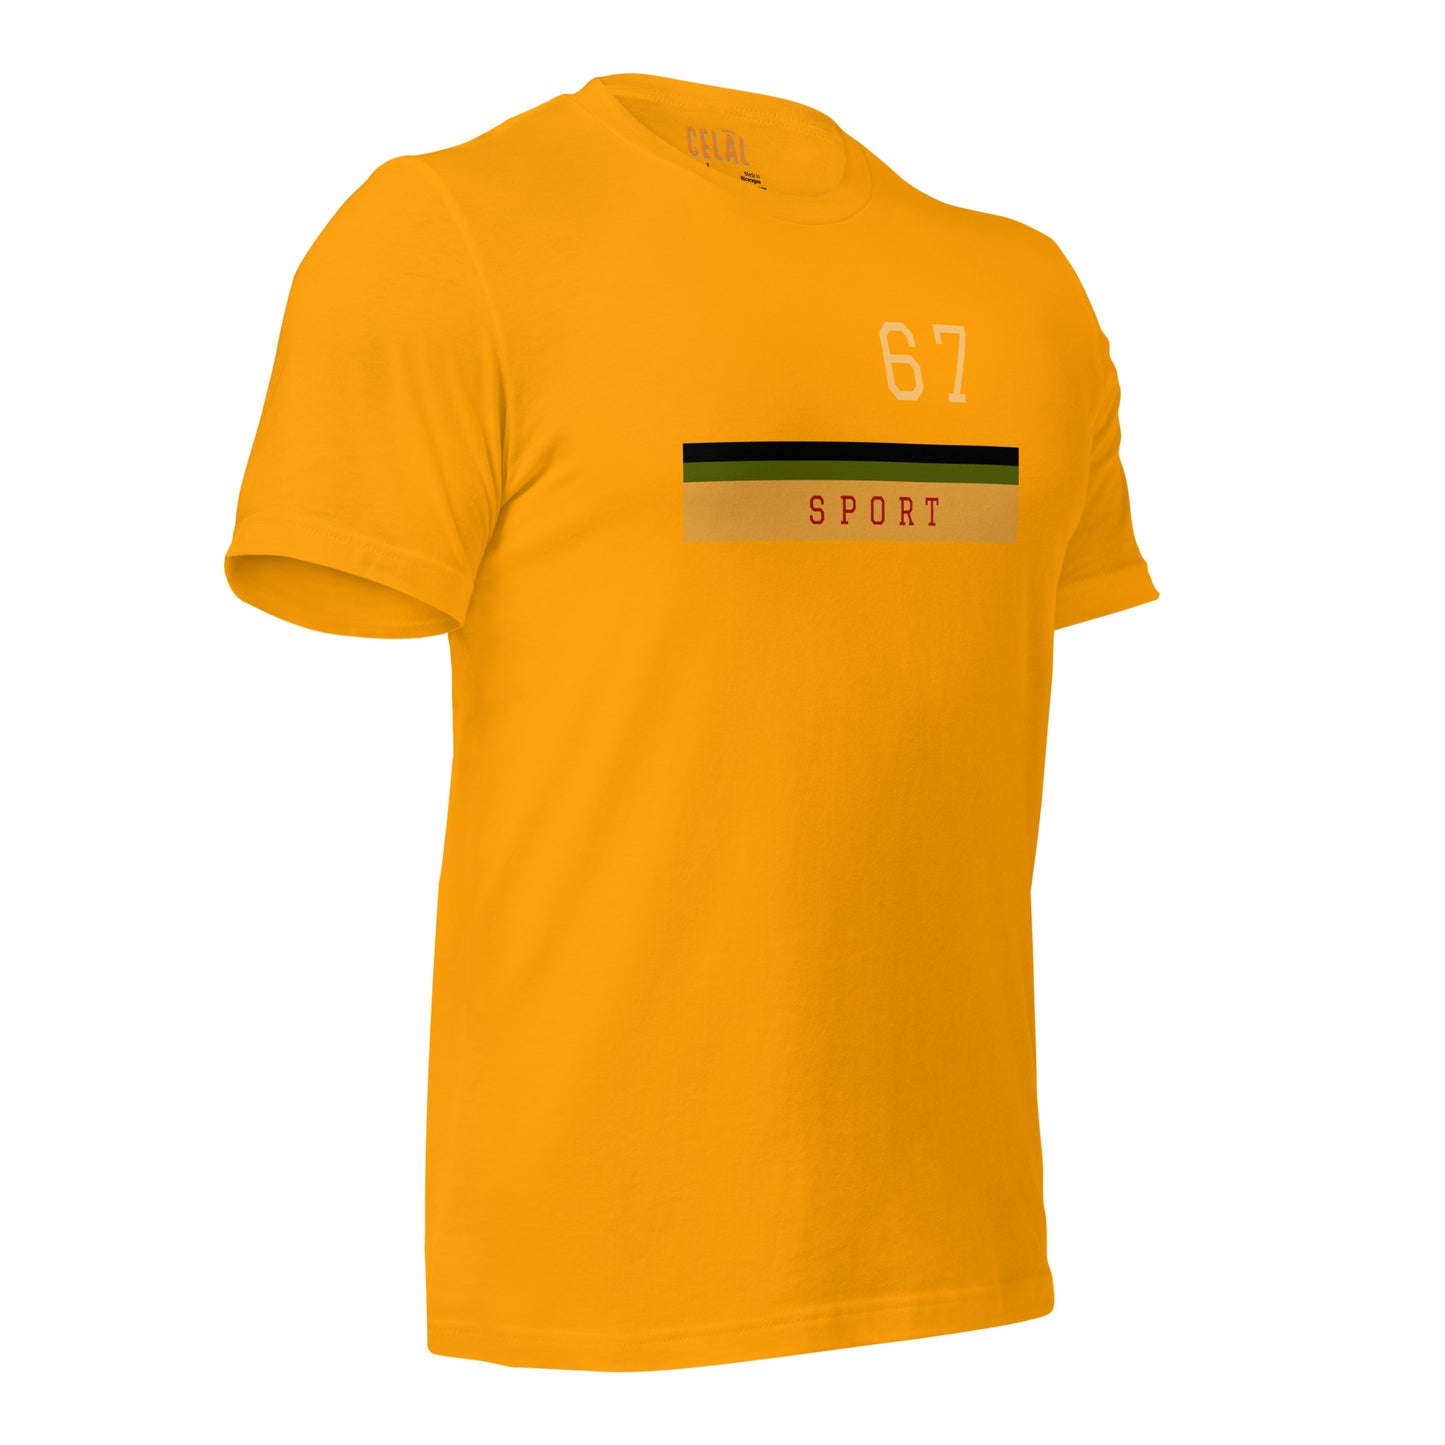 67 Unisex t-shirt